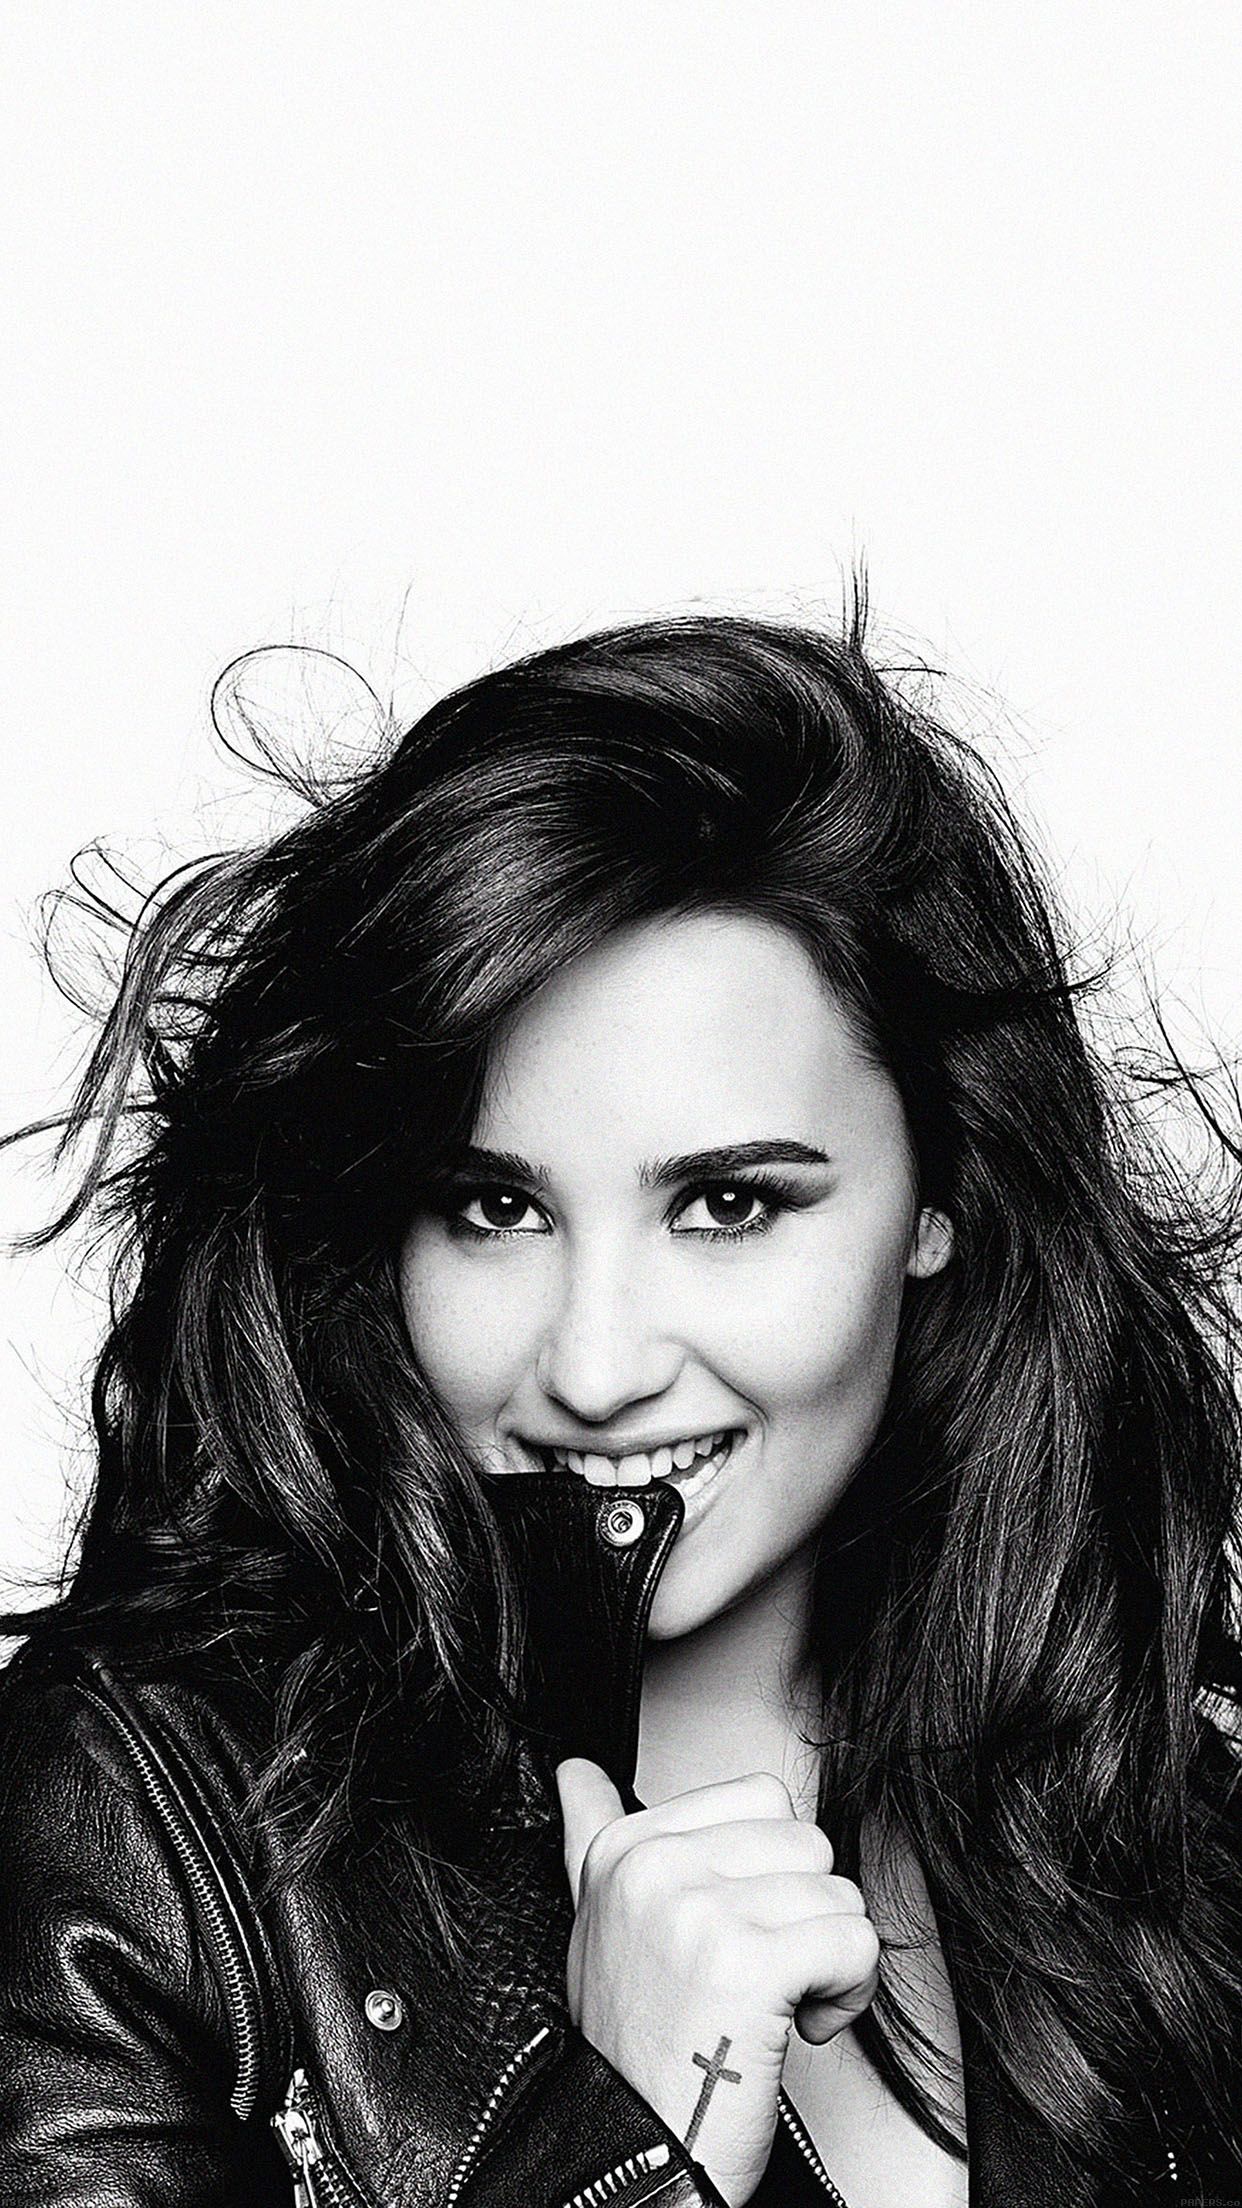 Demi Lovato Portrait Wallpapers